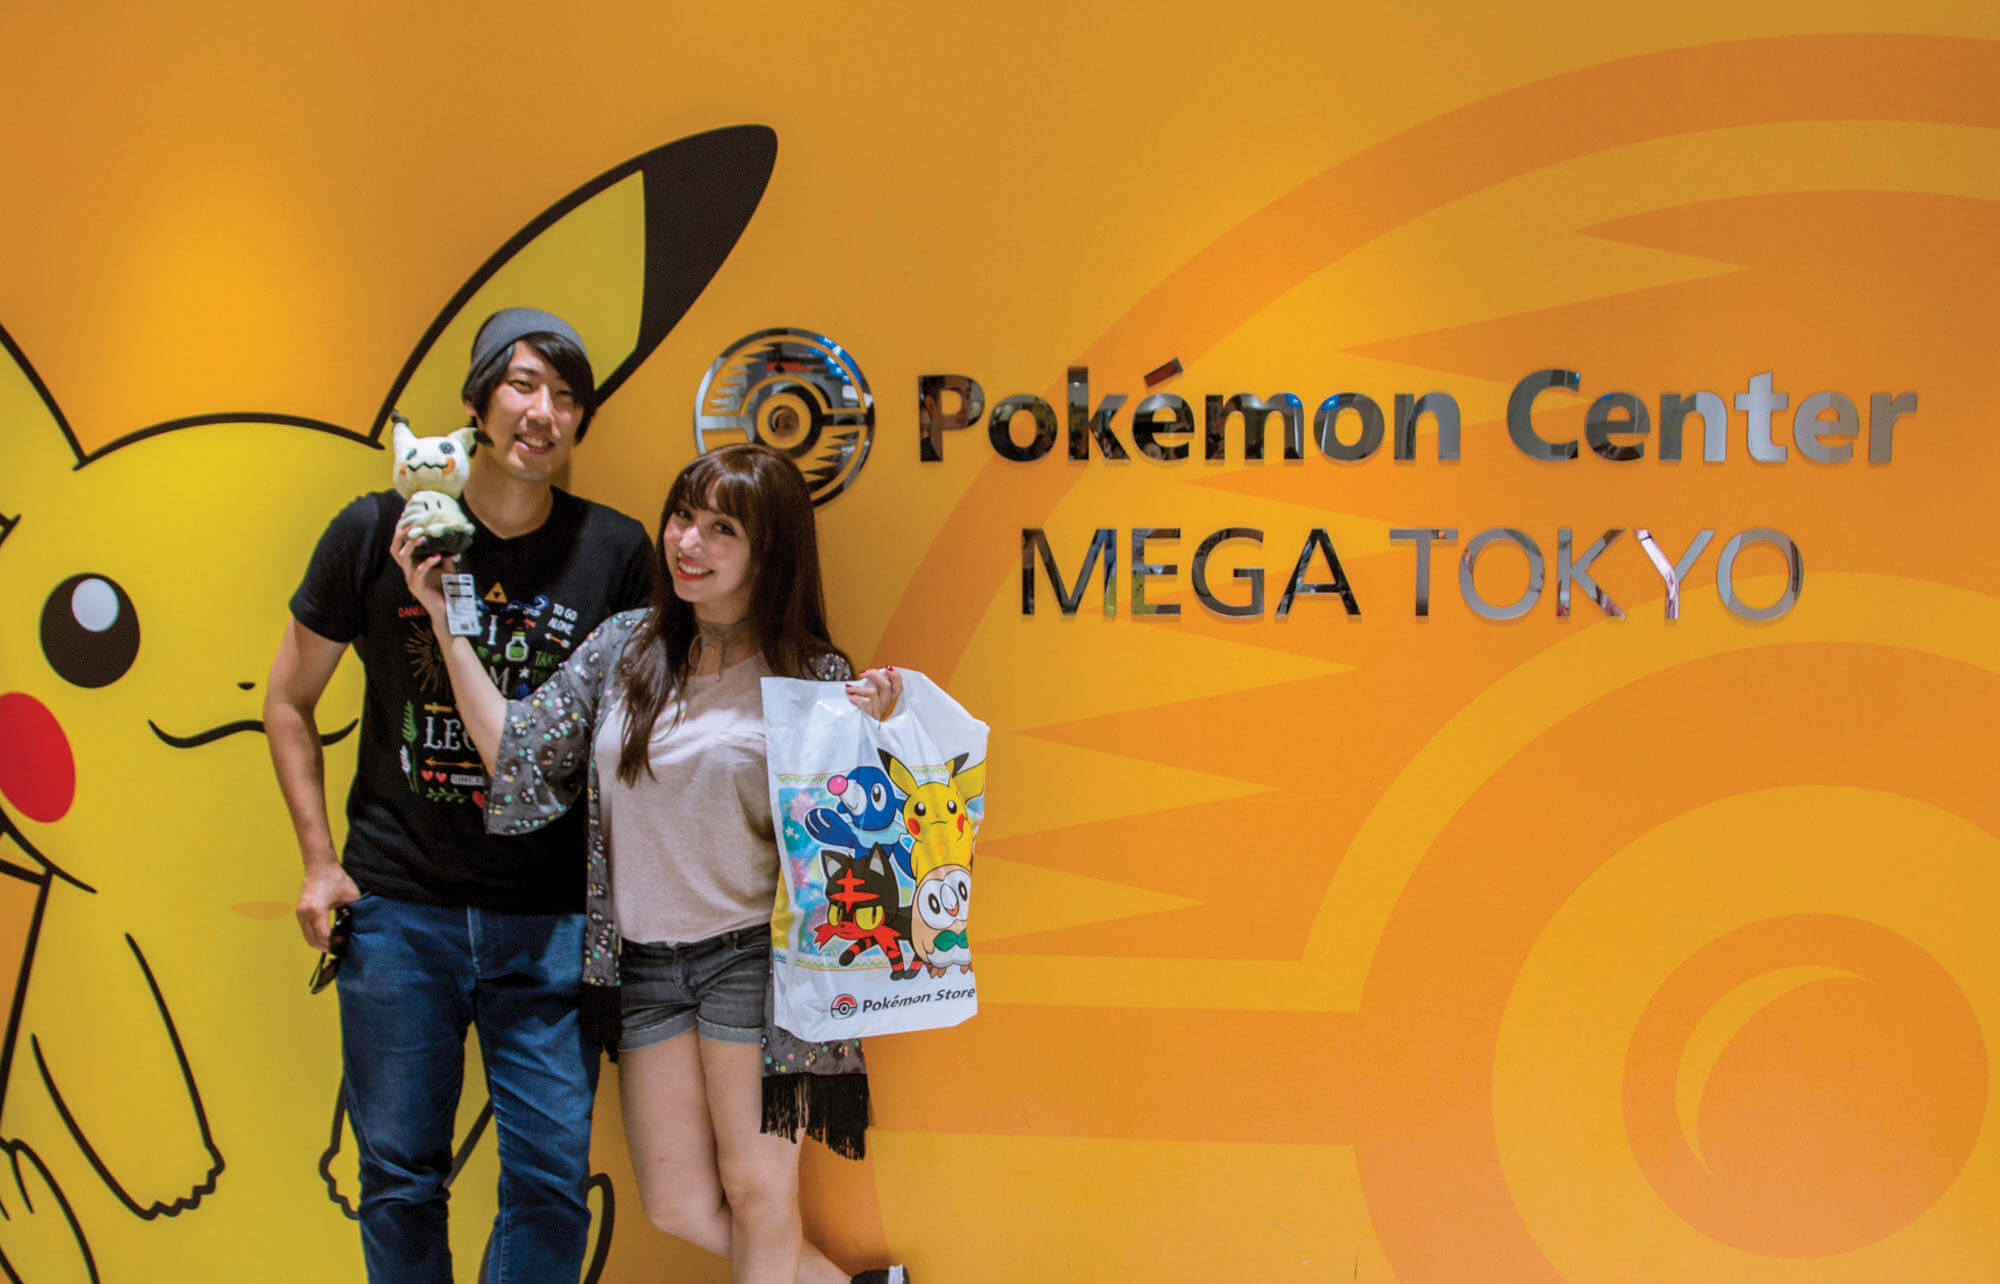 7 Hour Layover in Tokyo + Pokémon Center Mega Tokyo + Poké Haul